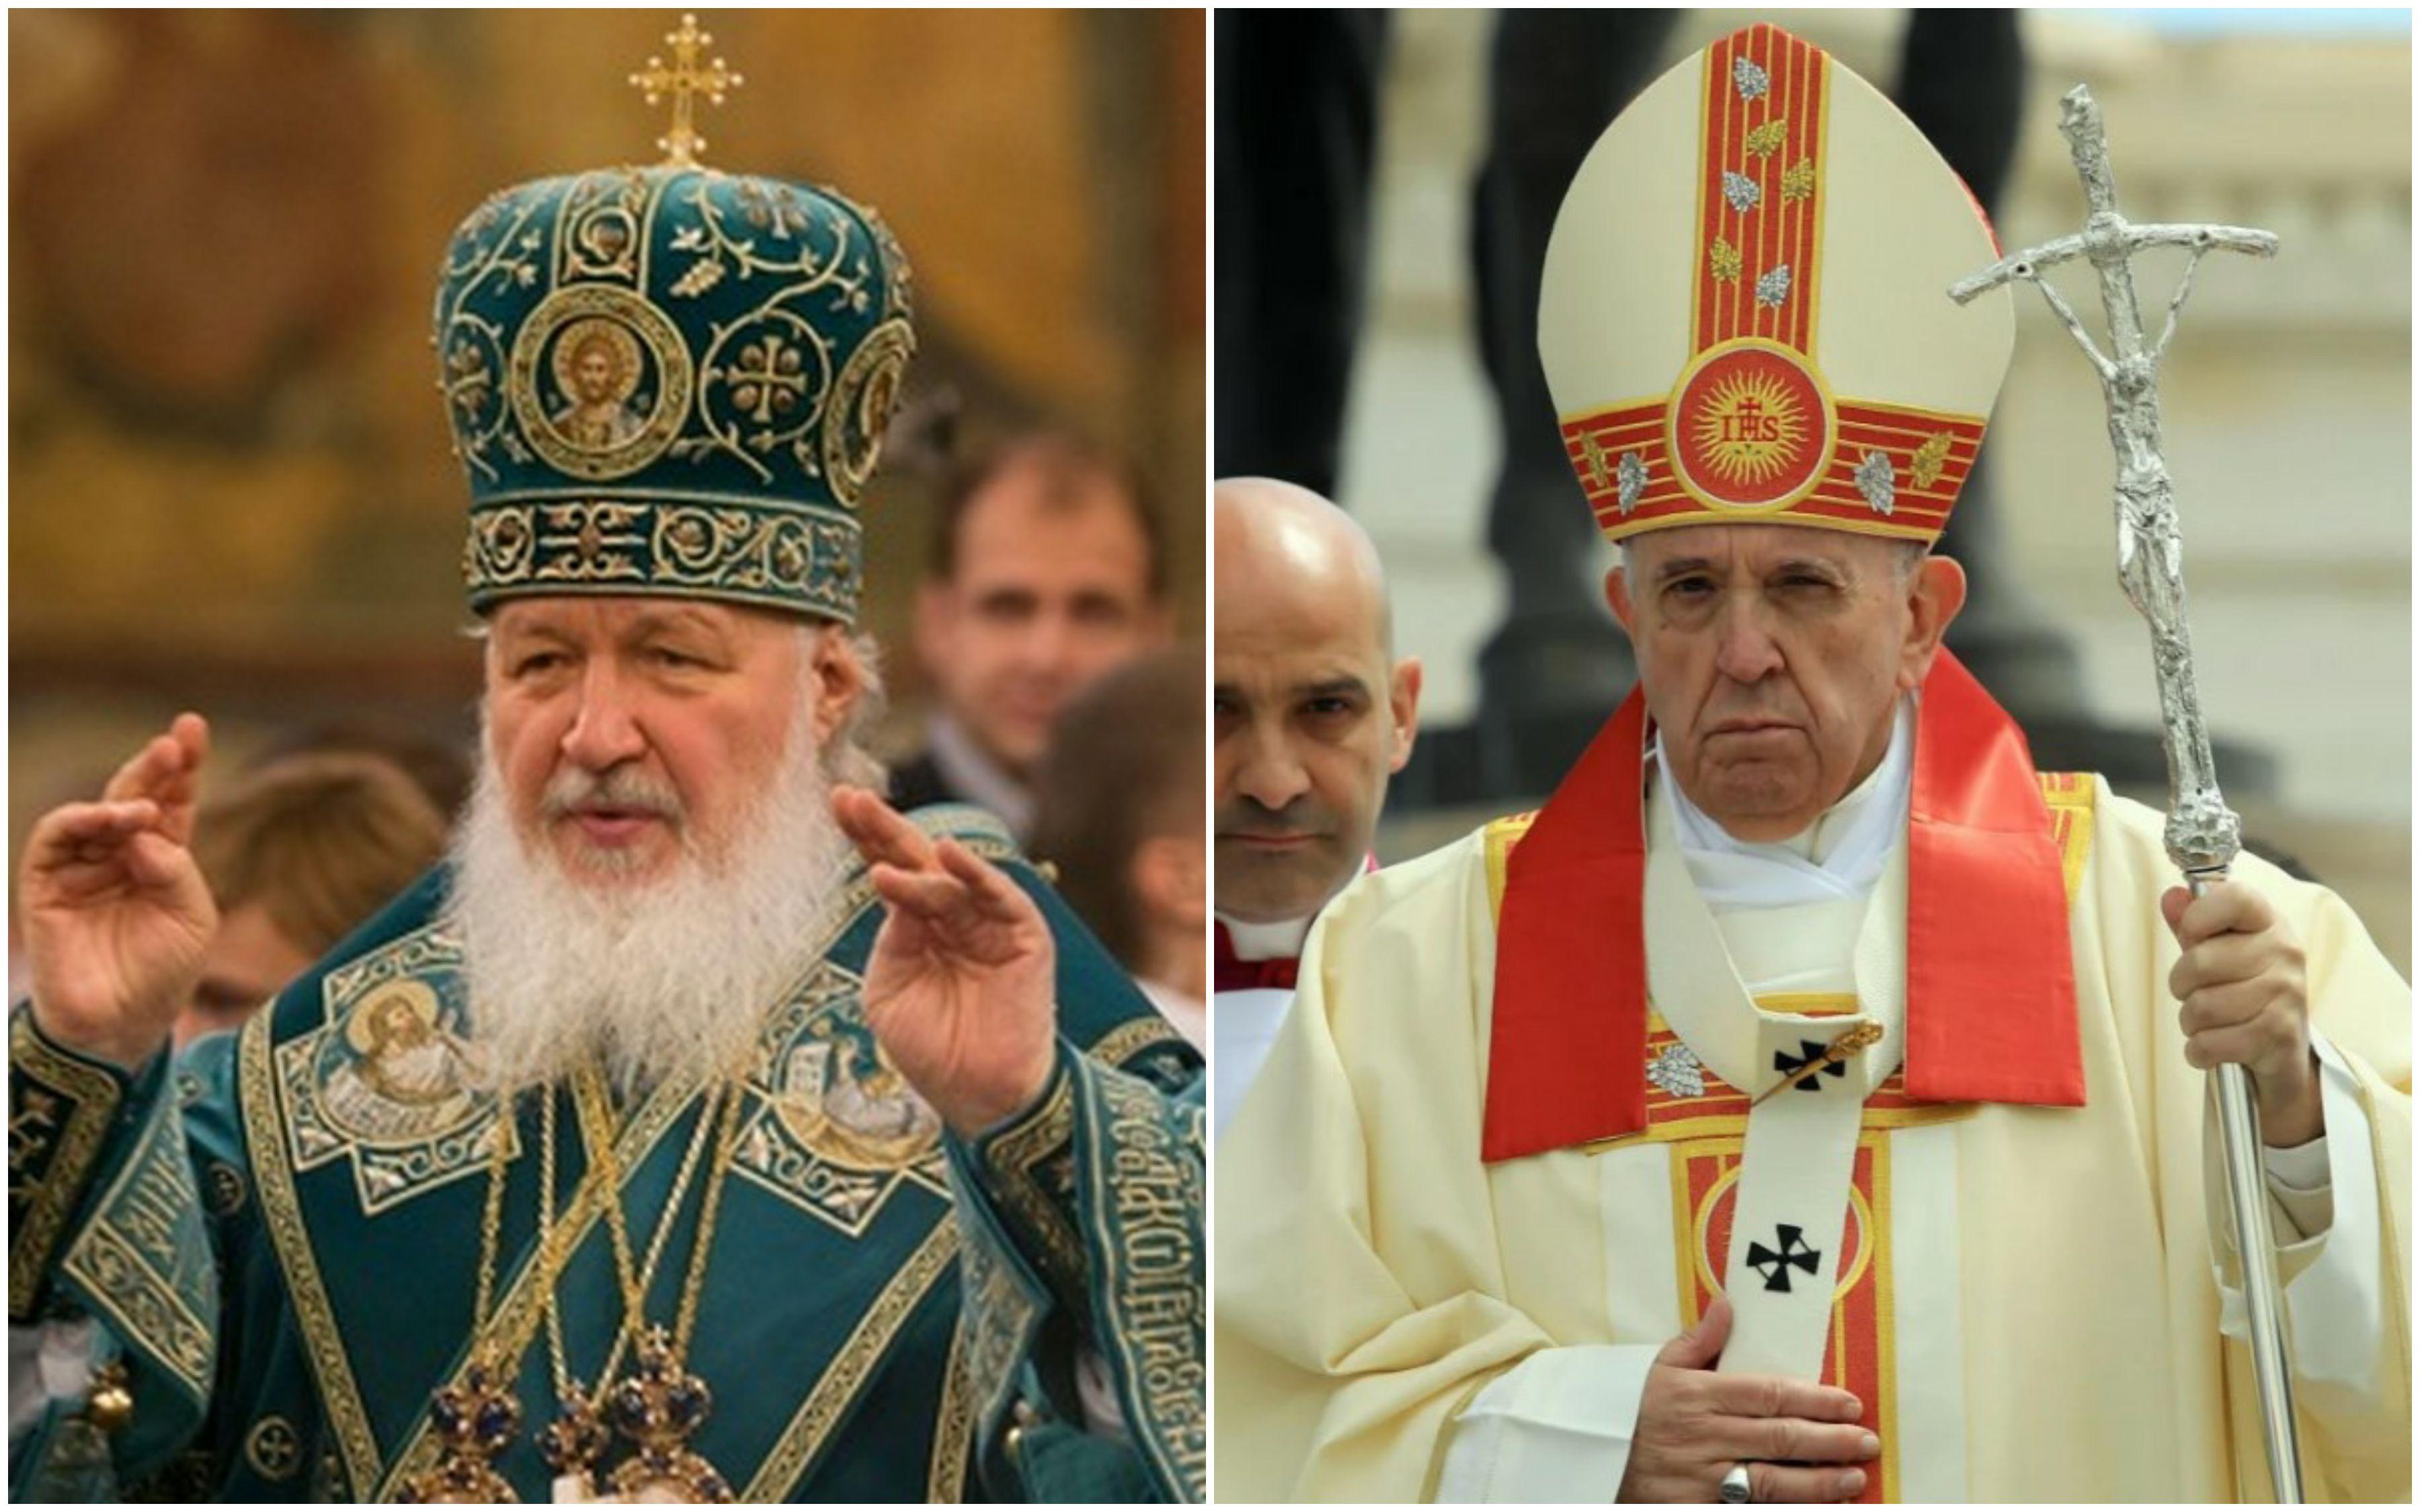 Ruski patrijarh i papa Franjo pozvali na "pravedan mir" u Ukrajini